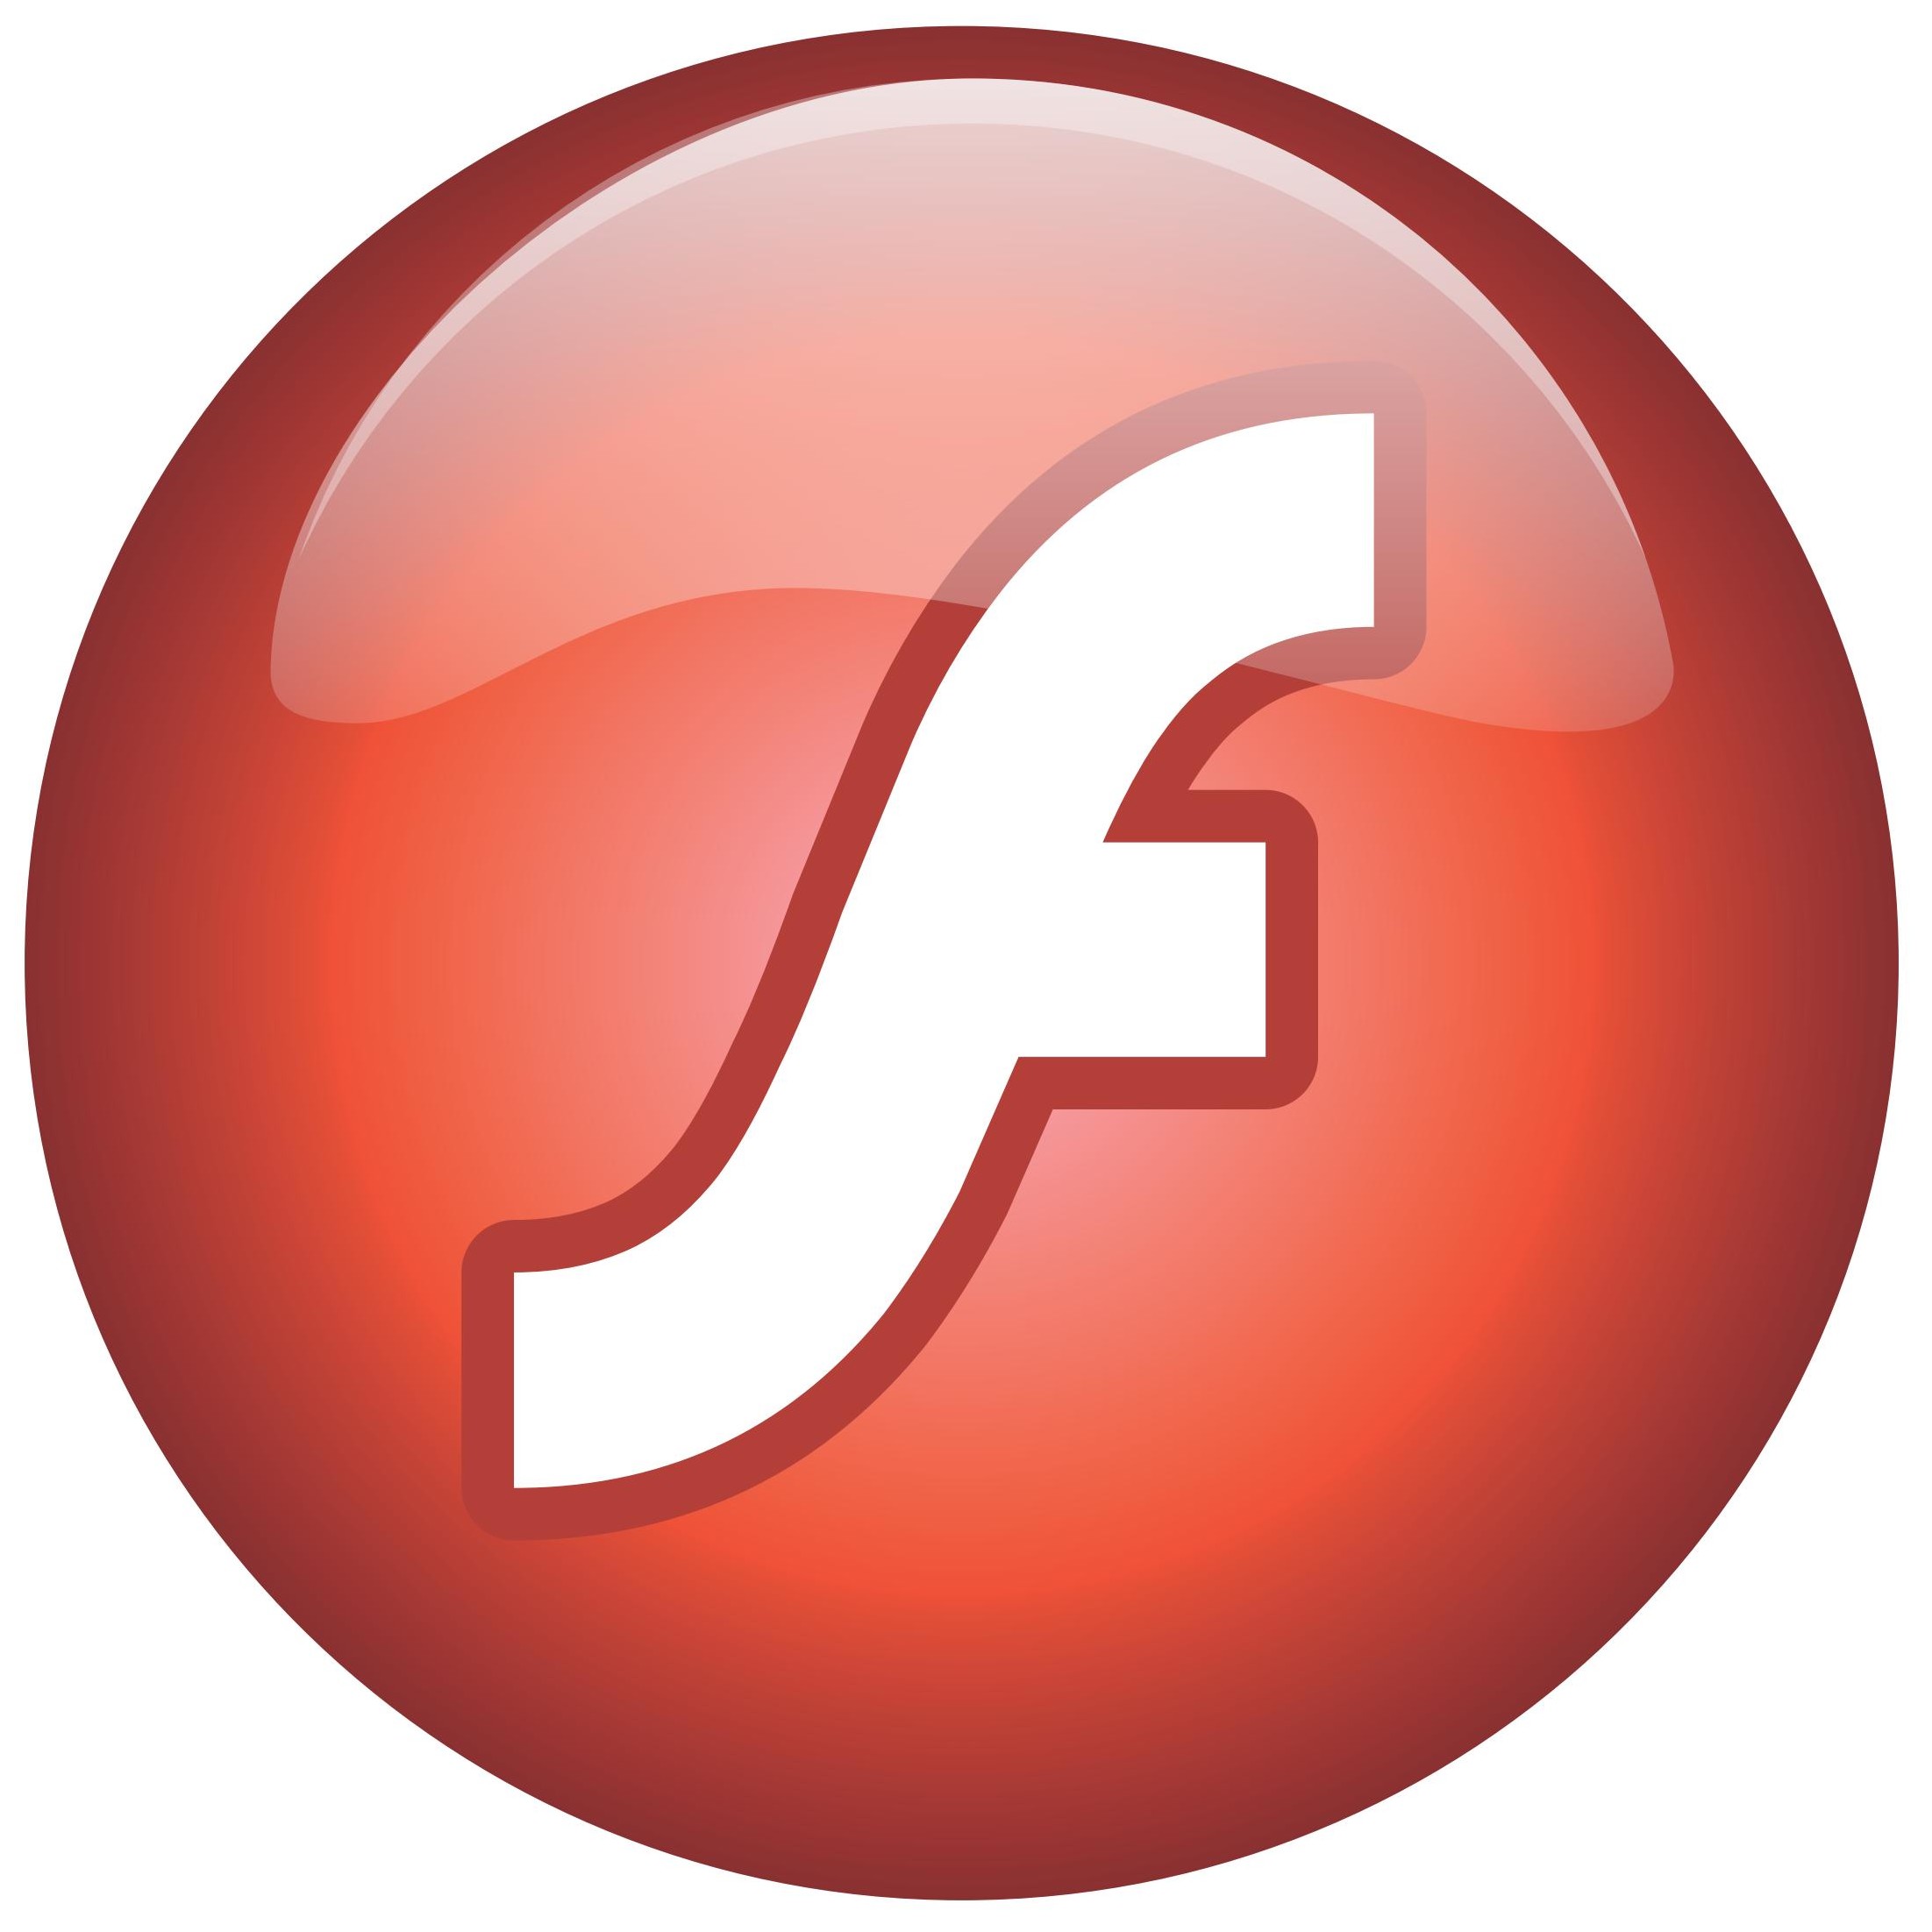 Adobe Flash Logo Wallpaper